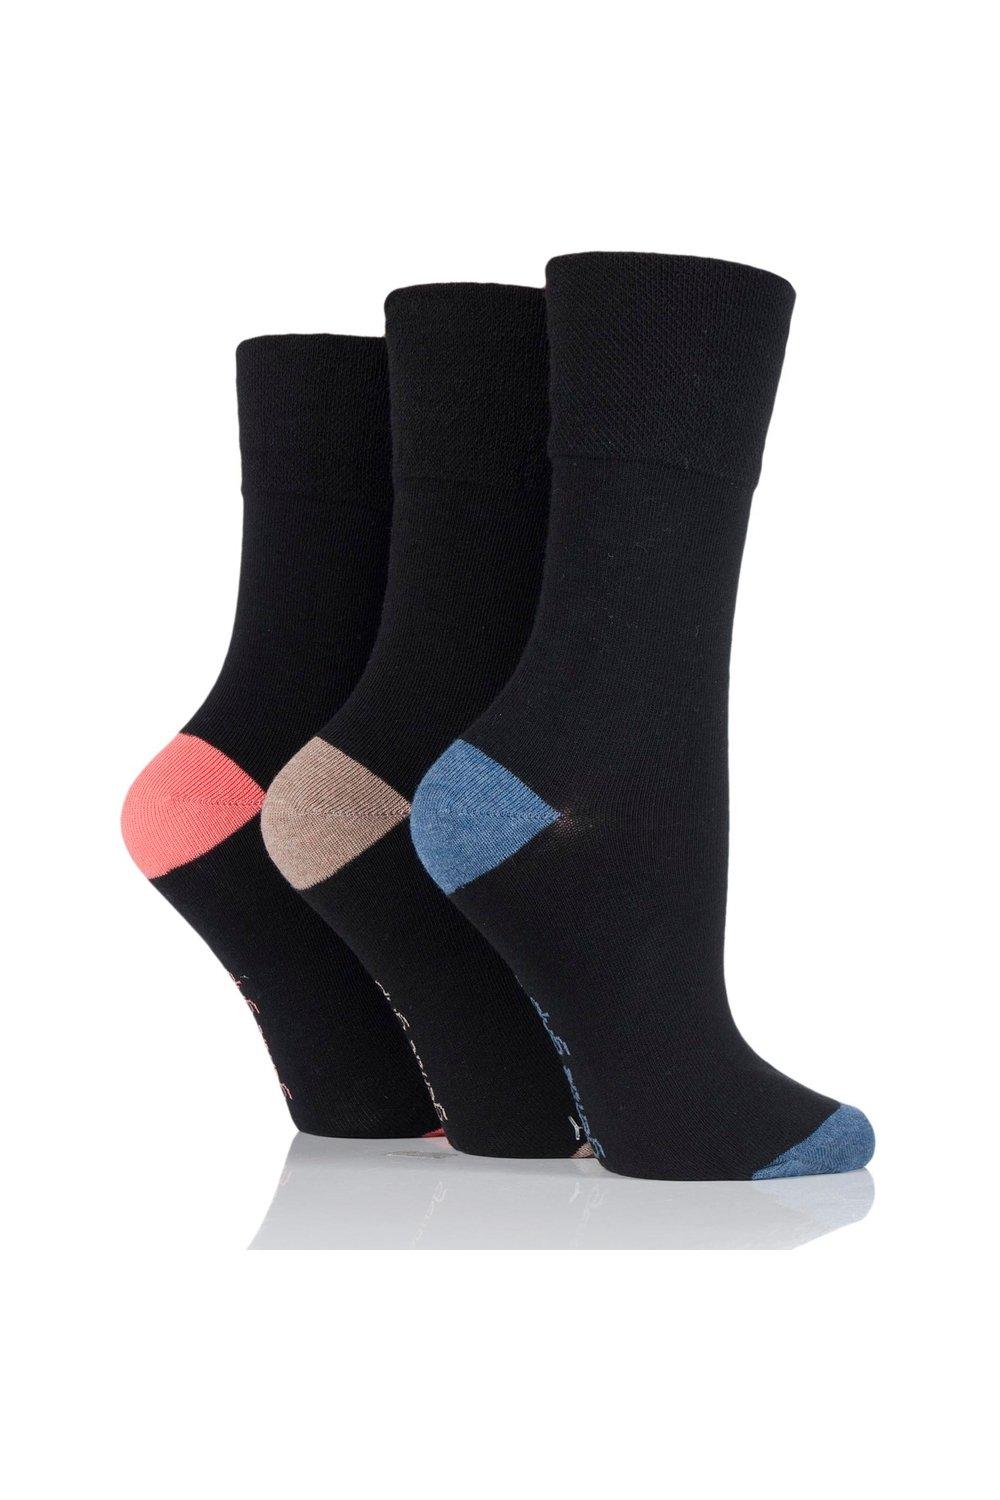 3 Pair Contrast Heel and Toe Socks